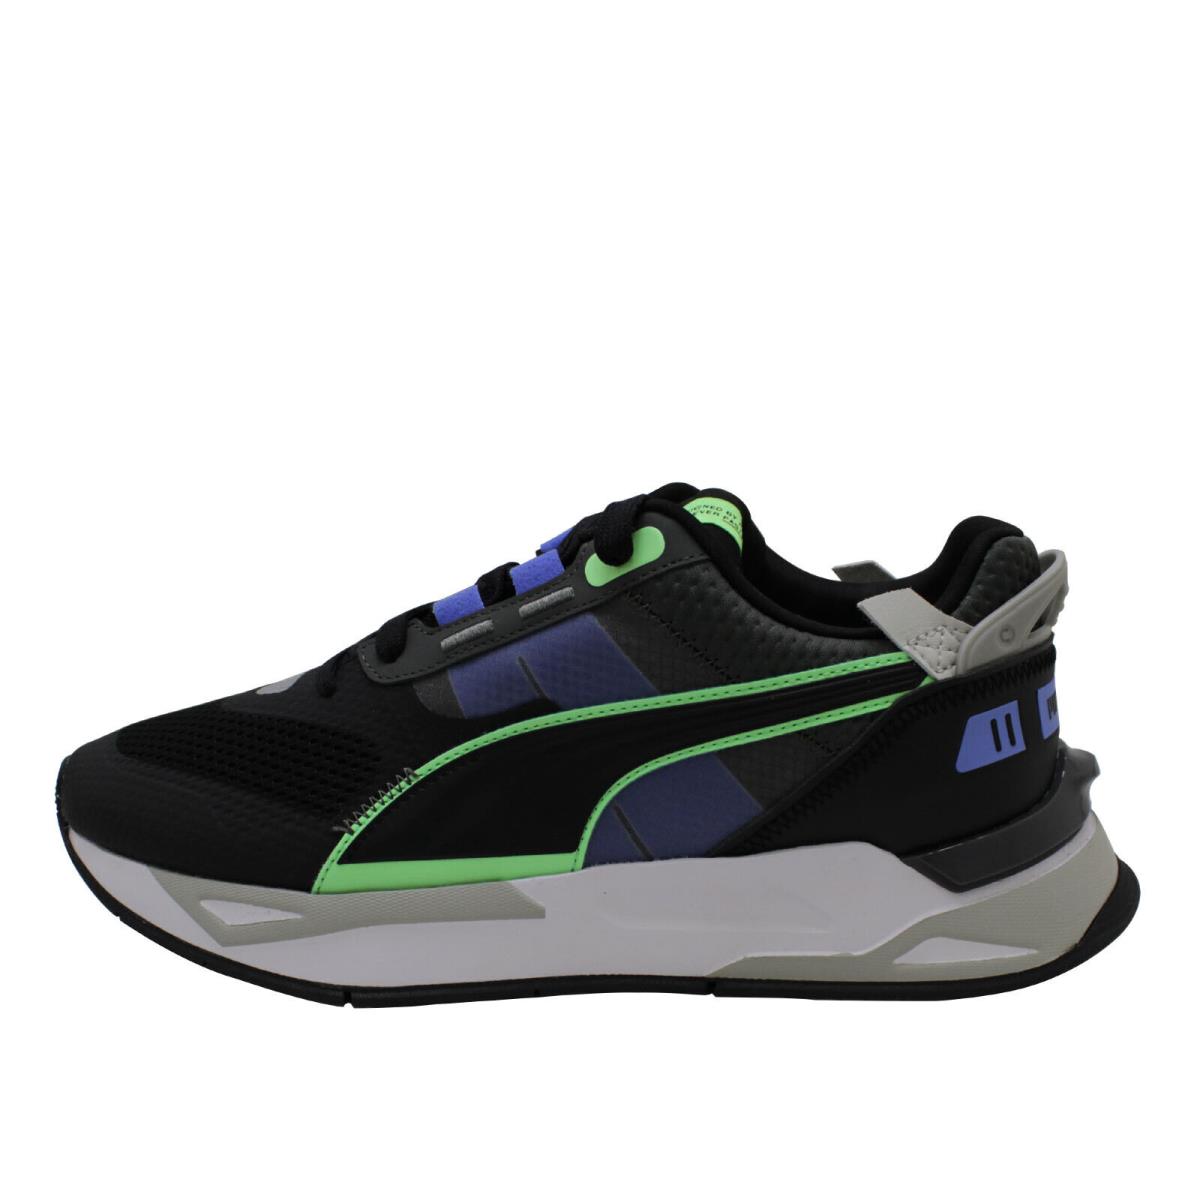 Puma Mirage Sport Tech Darkshadow Black Men`s Sneakers 38310702 - Darkshadow Black